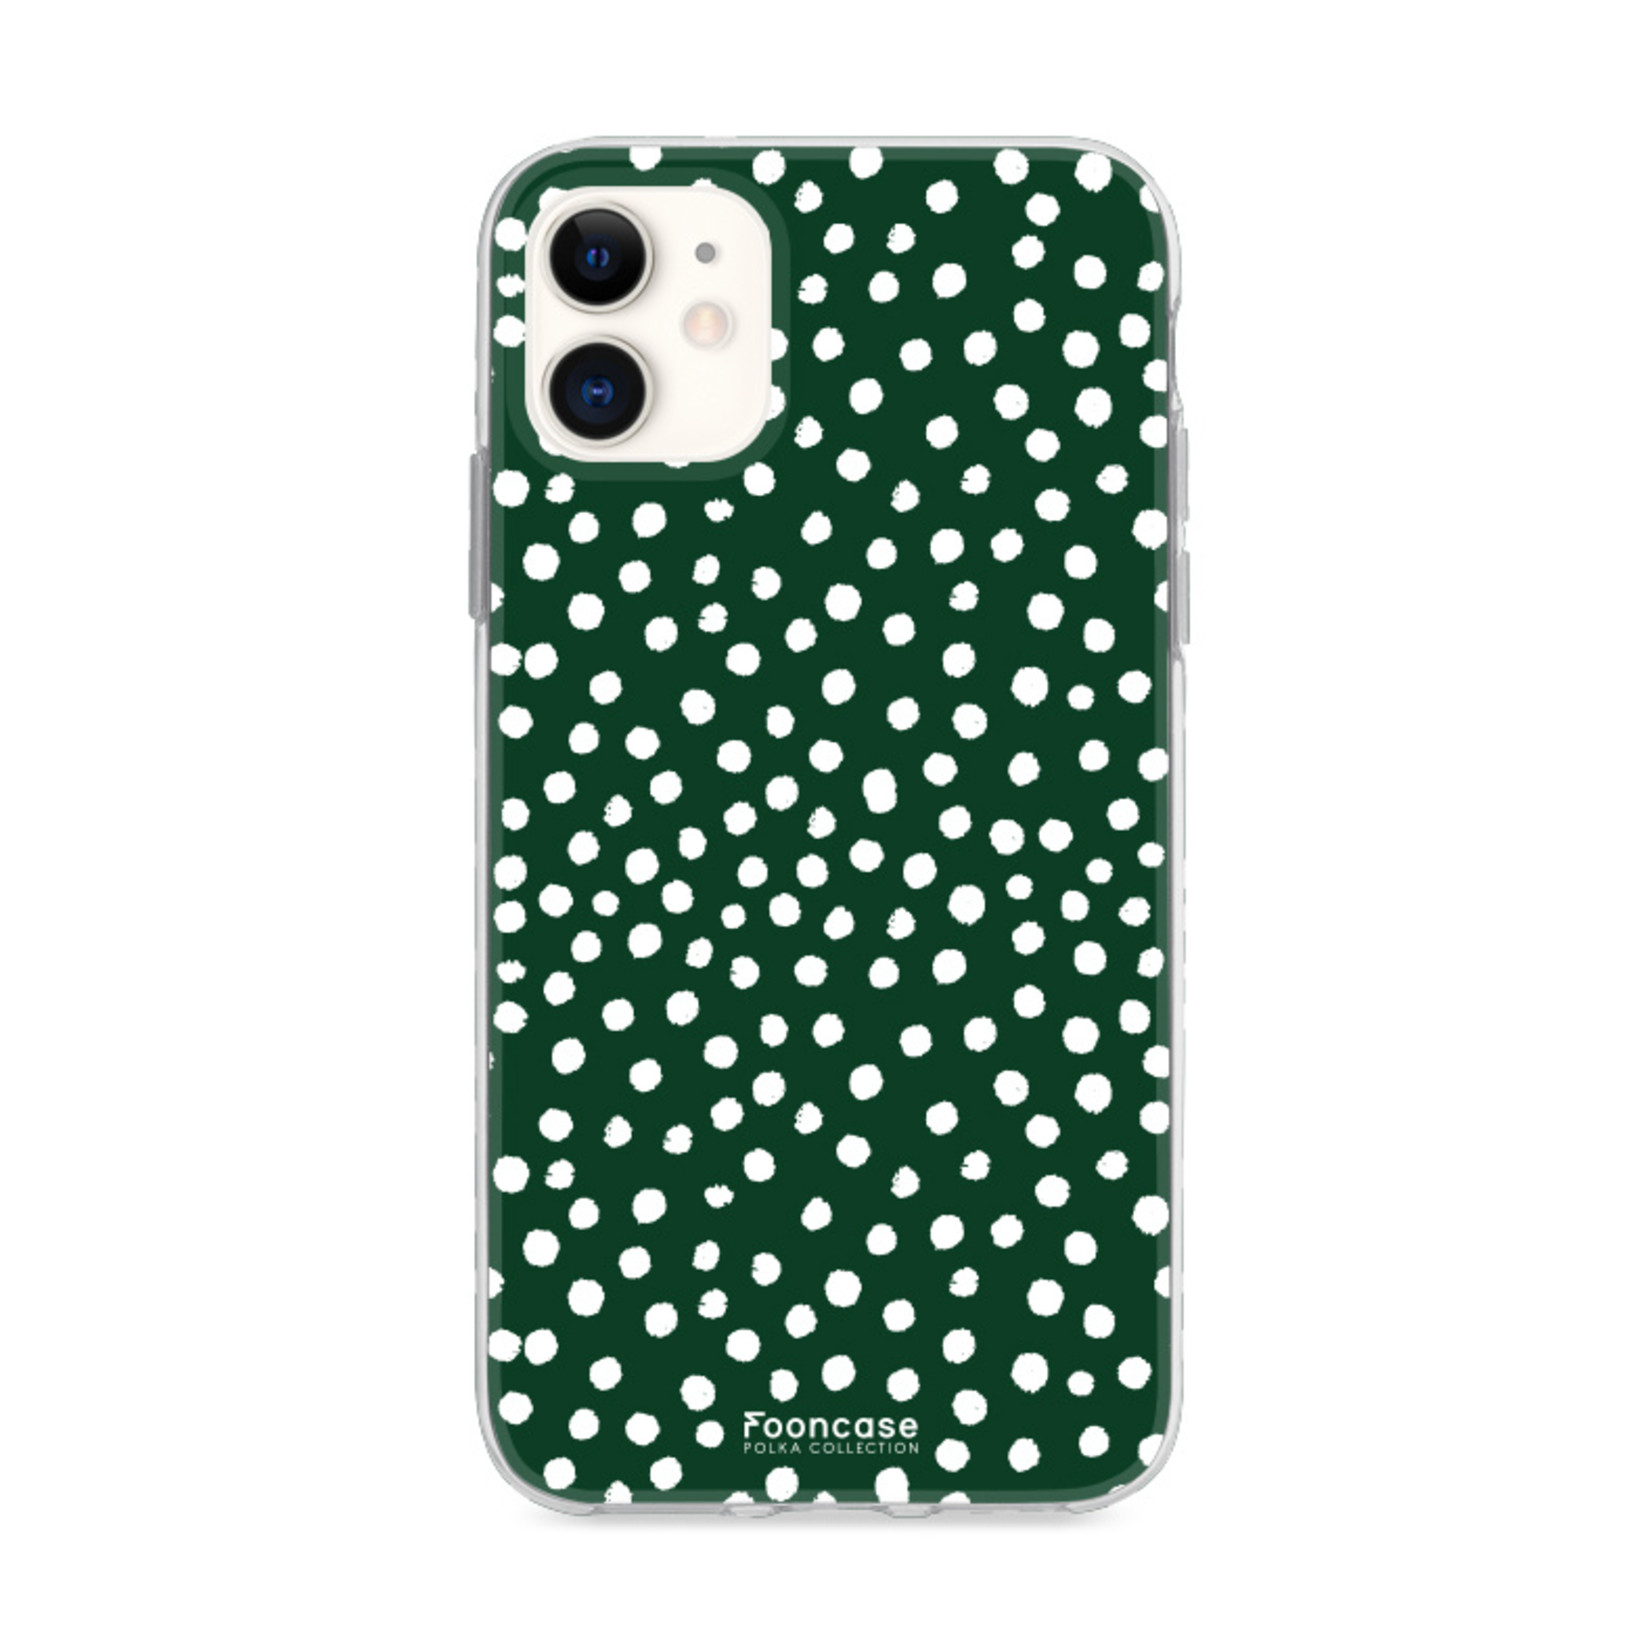 FOONCASE iPhone 12 Mini - POLKA COLLECTION / Verde scuro